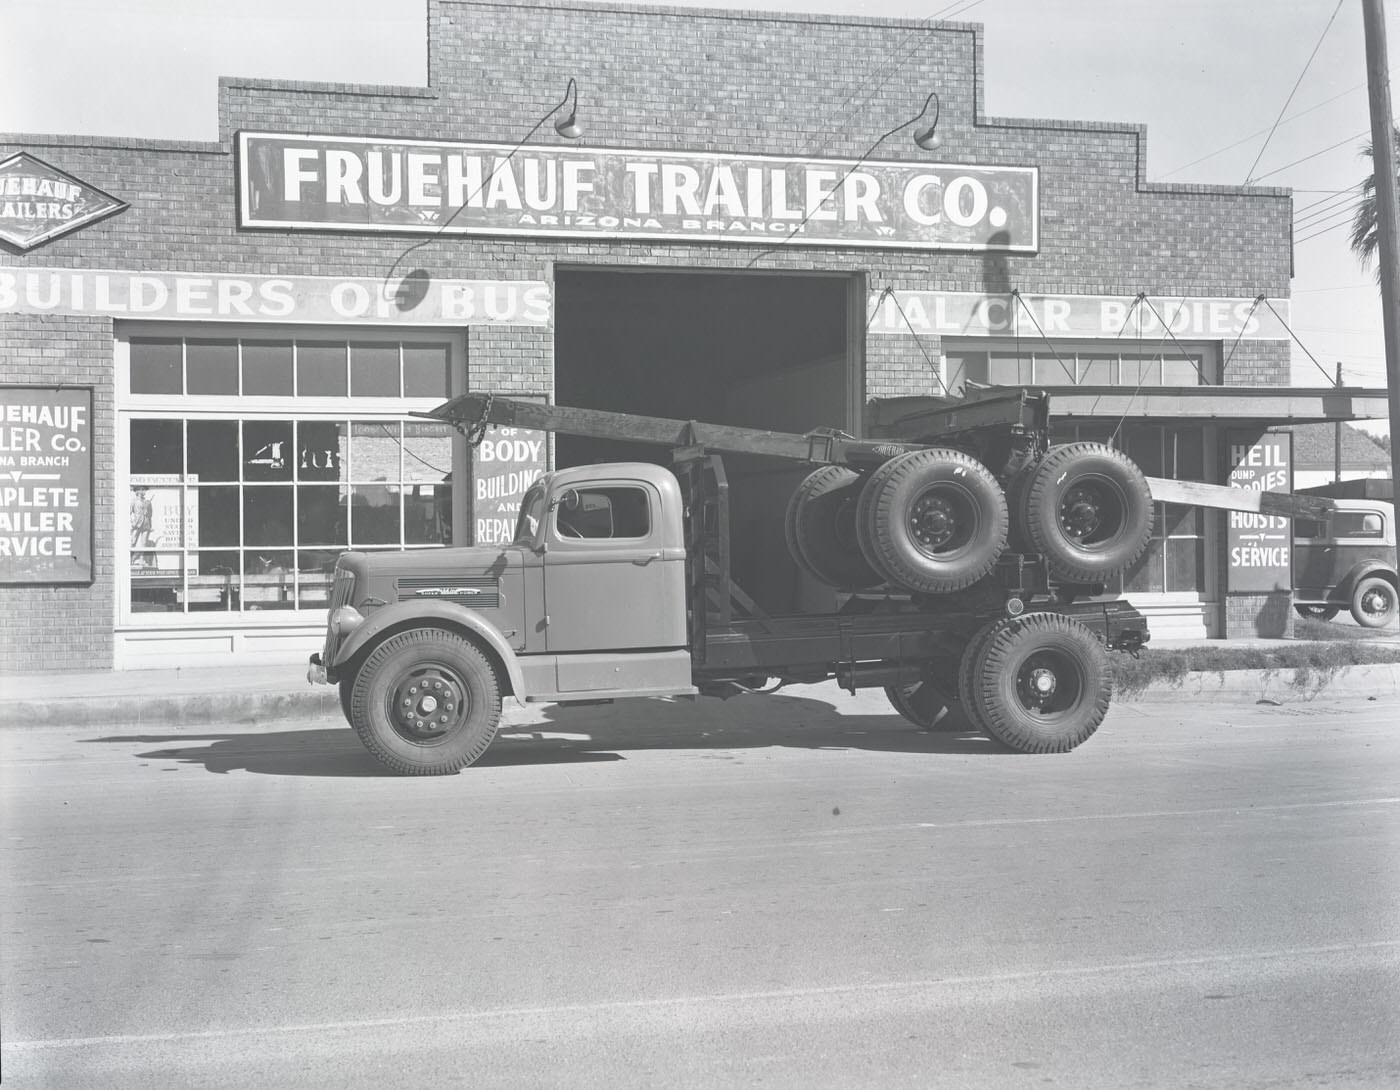 Fruehauf Trailer Co. Building Exterior and Truck, 1941